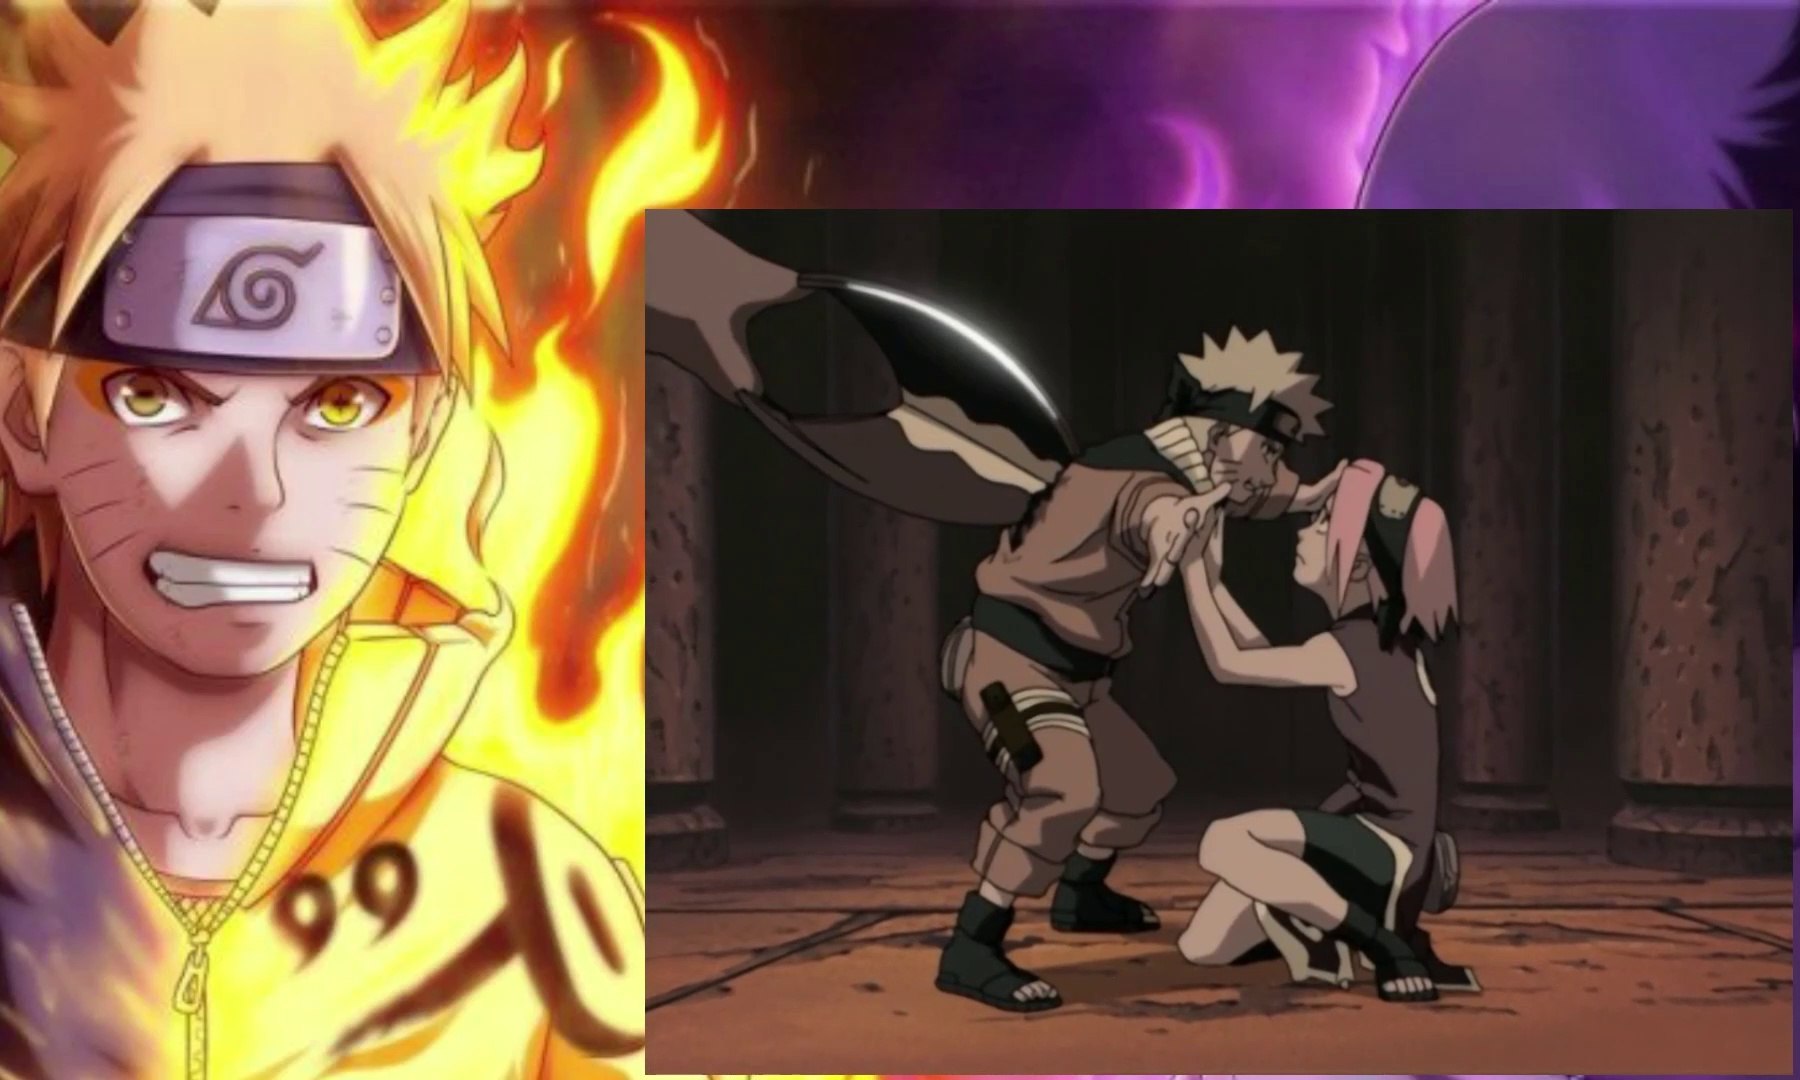 The Determination of Naruto